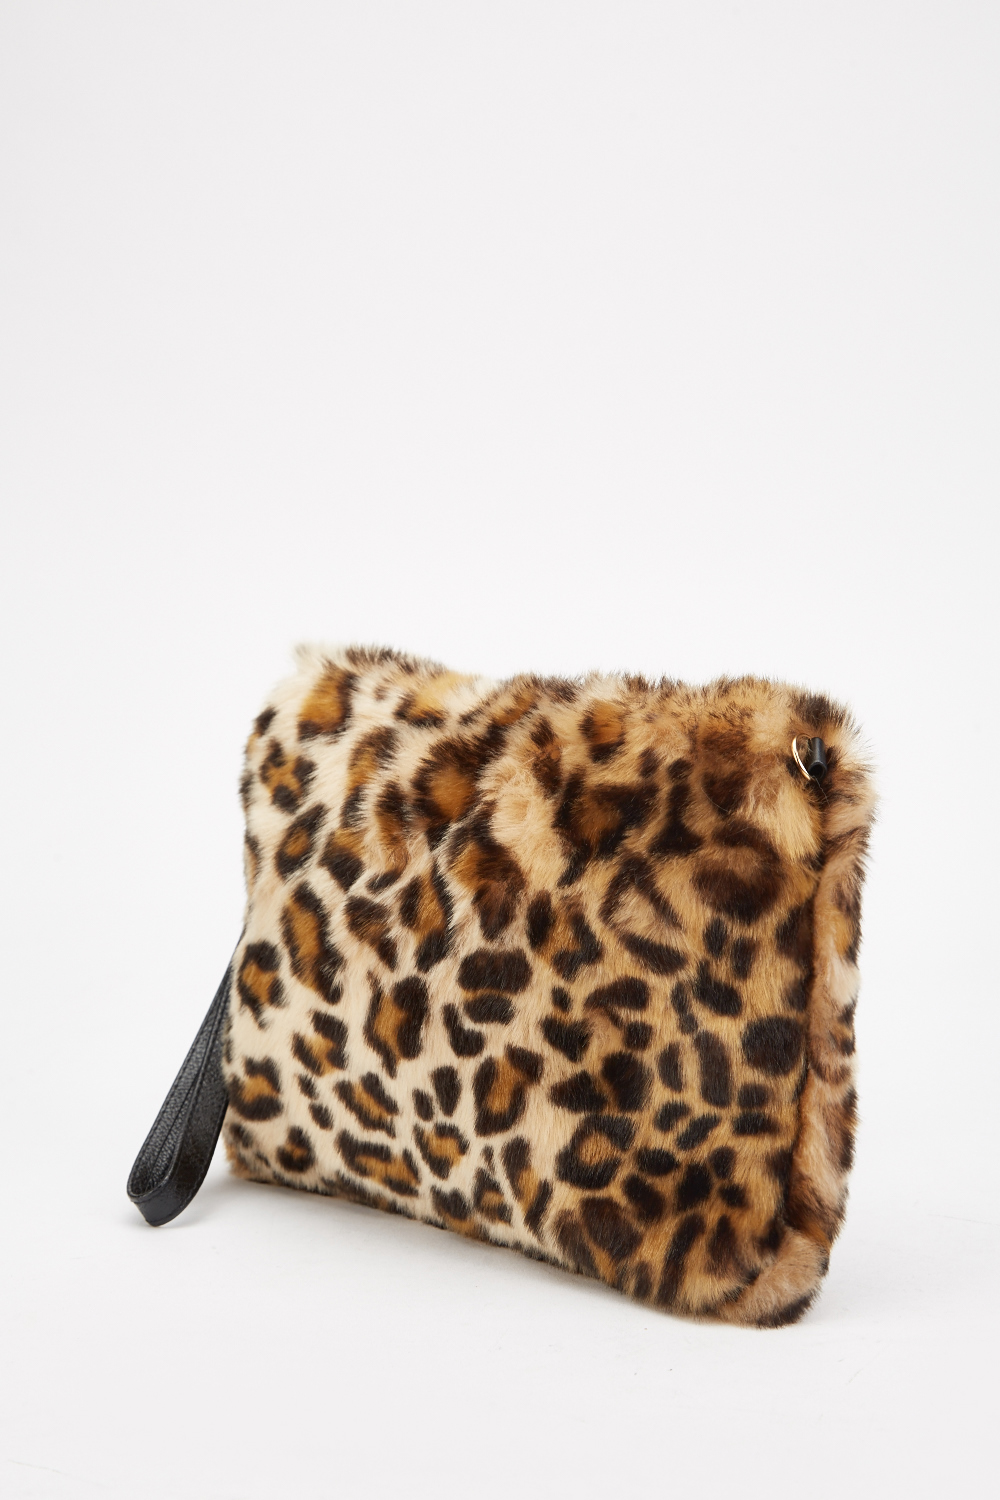 Fluffy Leopard Print Chain Bag - Just $6